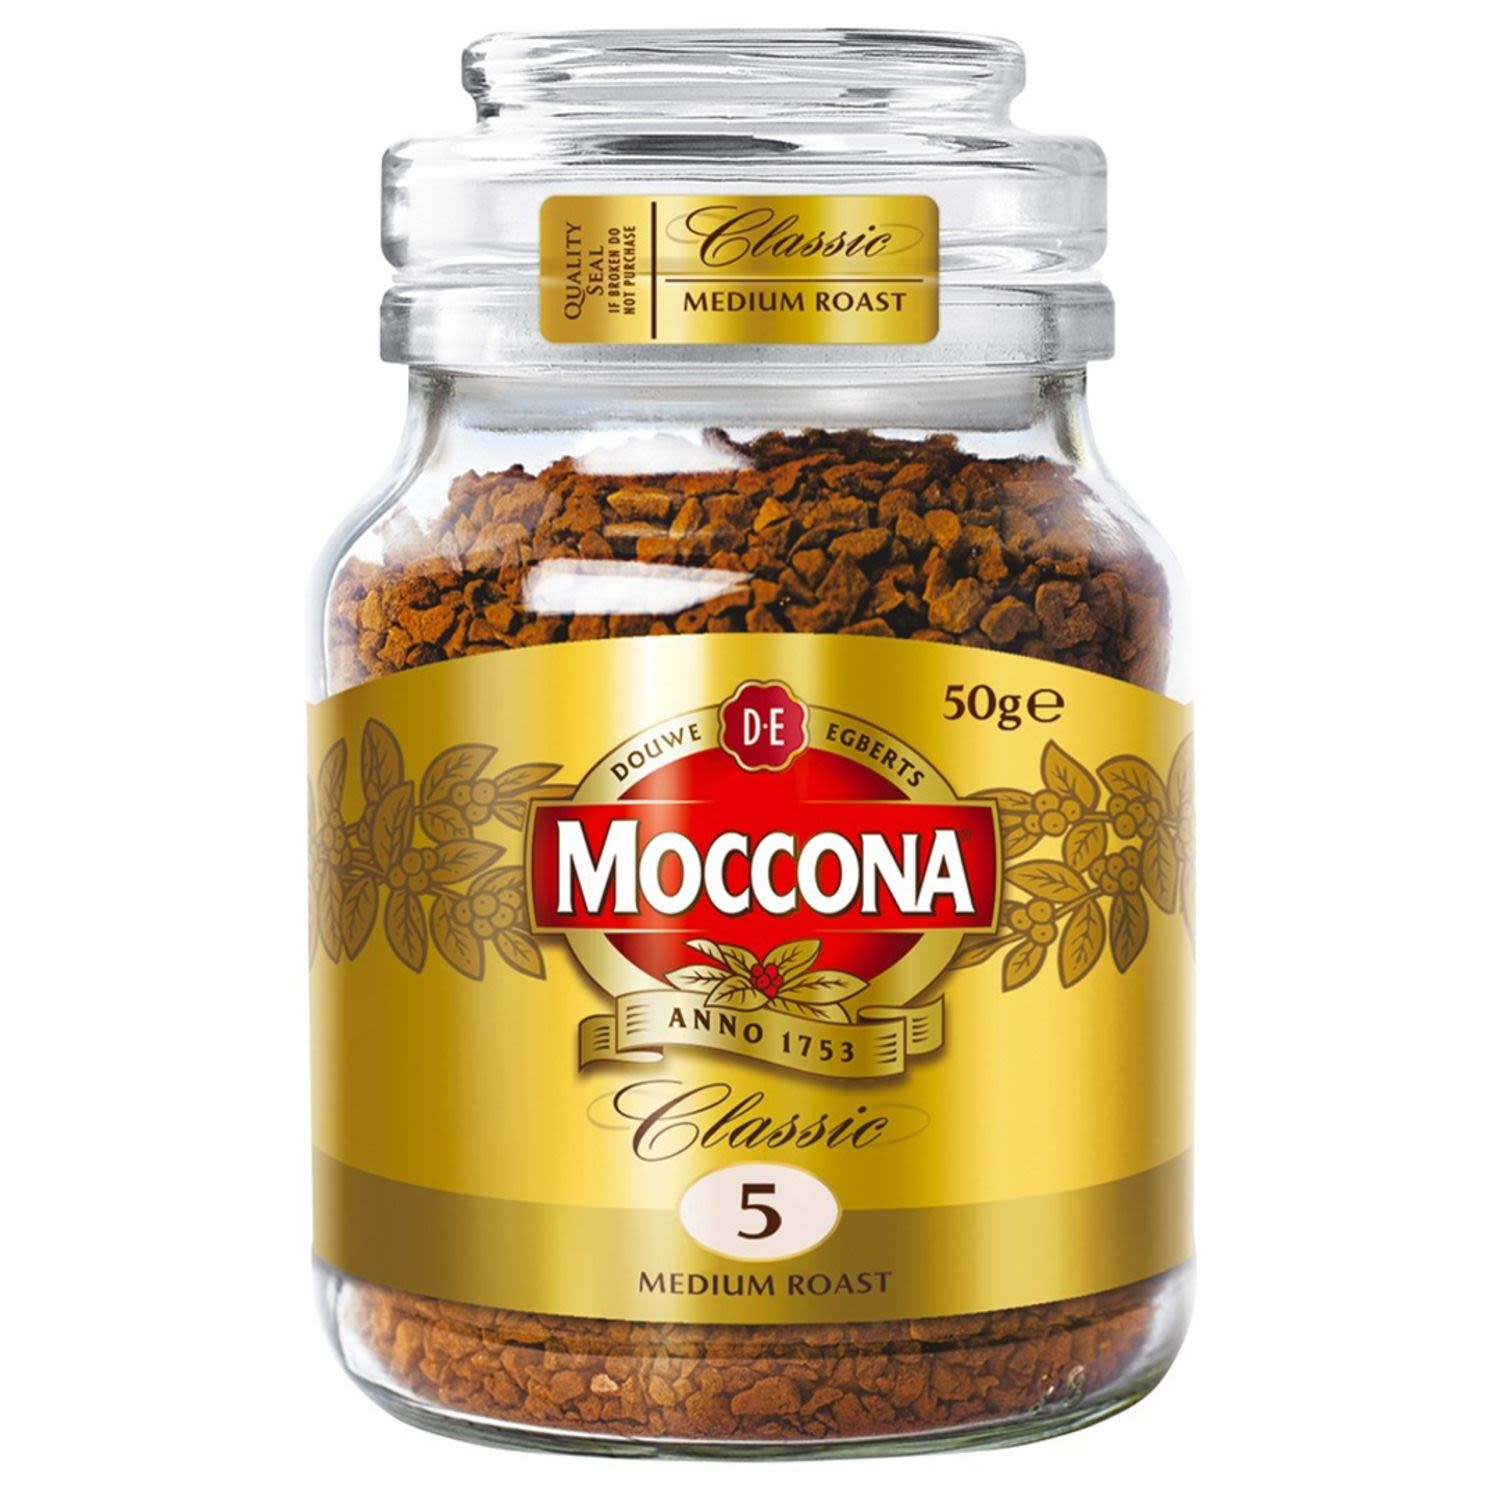 Moccona Classic Medium Roast Instant Coffee 50gm